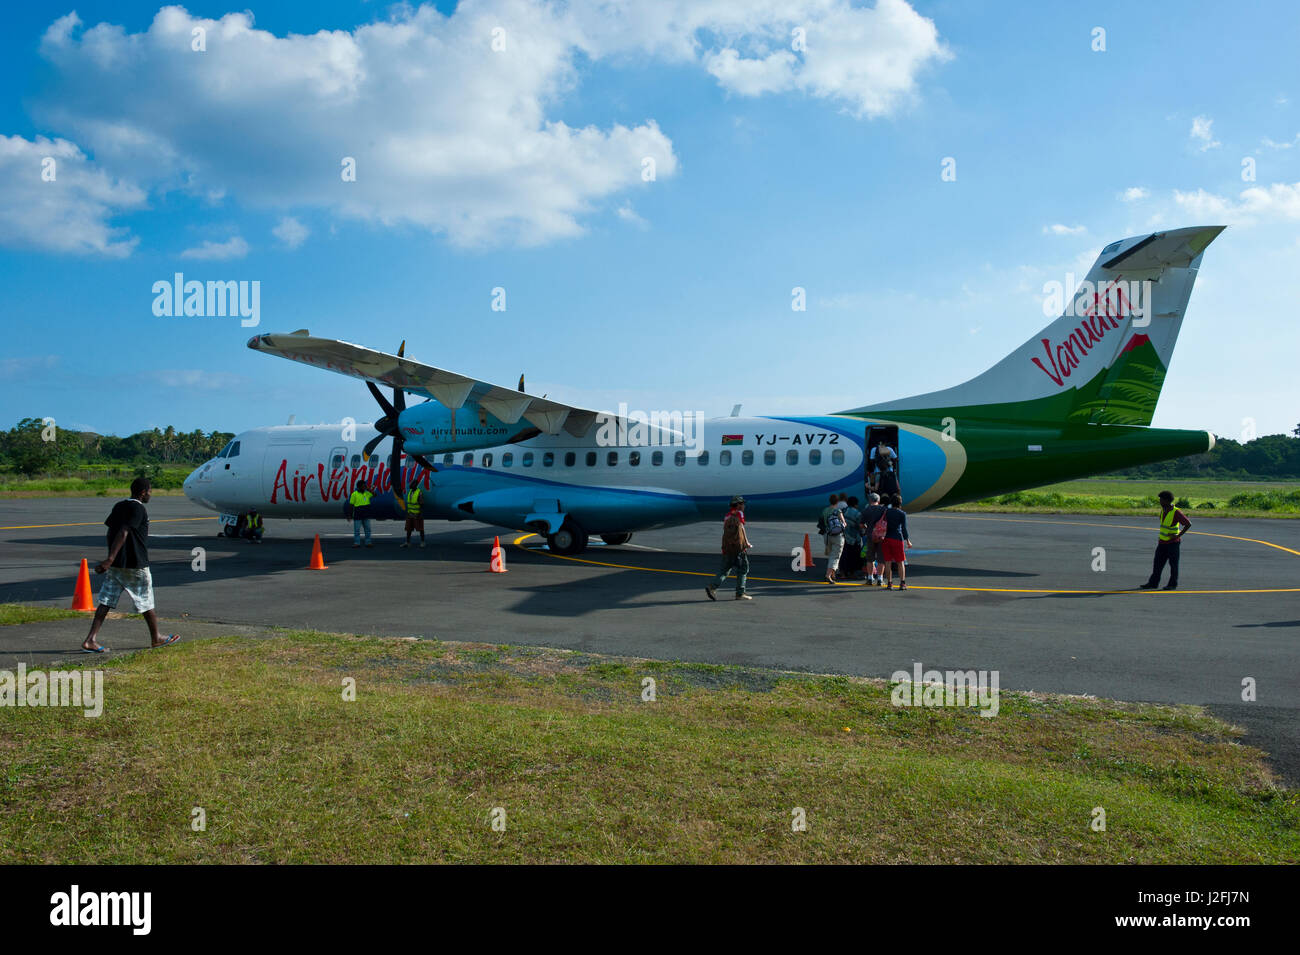 Airplane of Air Vanuatu, Island of Tanna, Vanuatu, South Pacific Stock ...